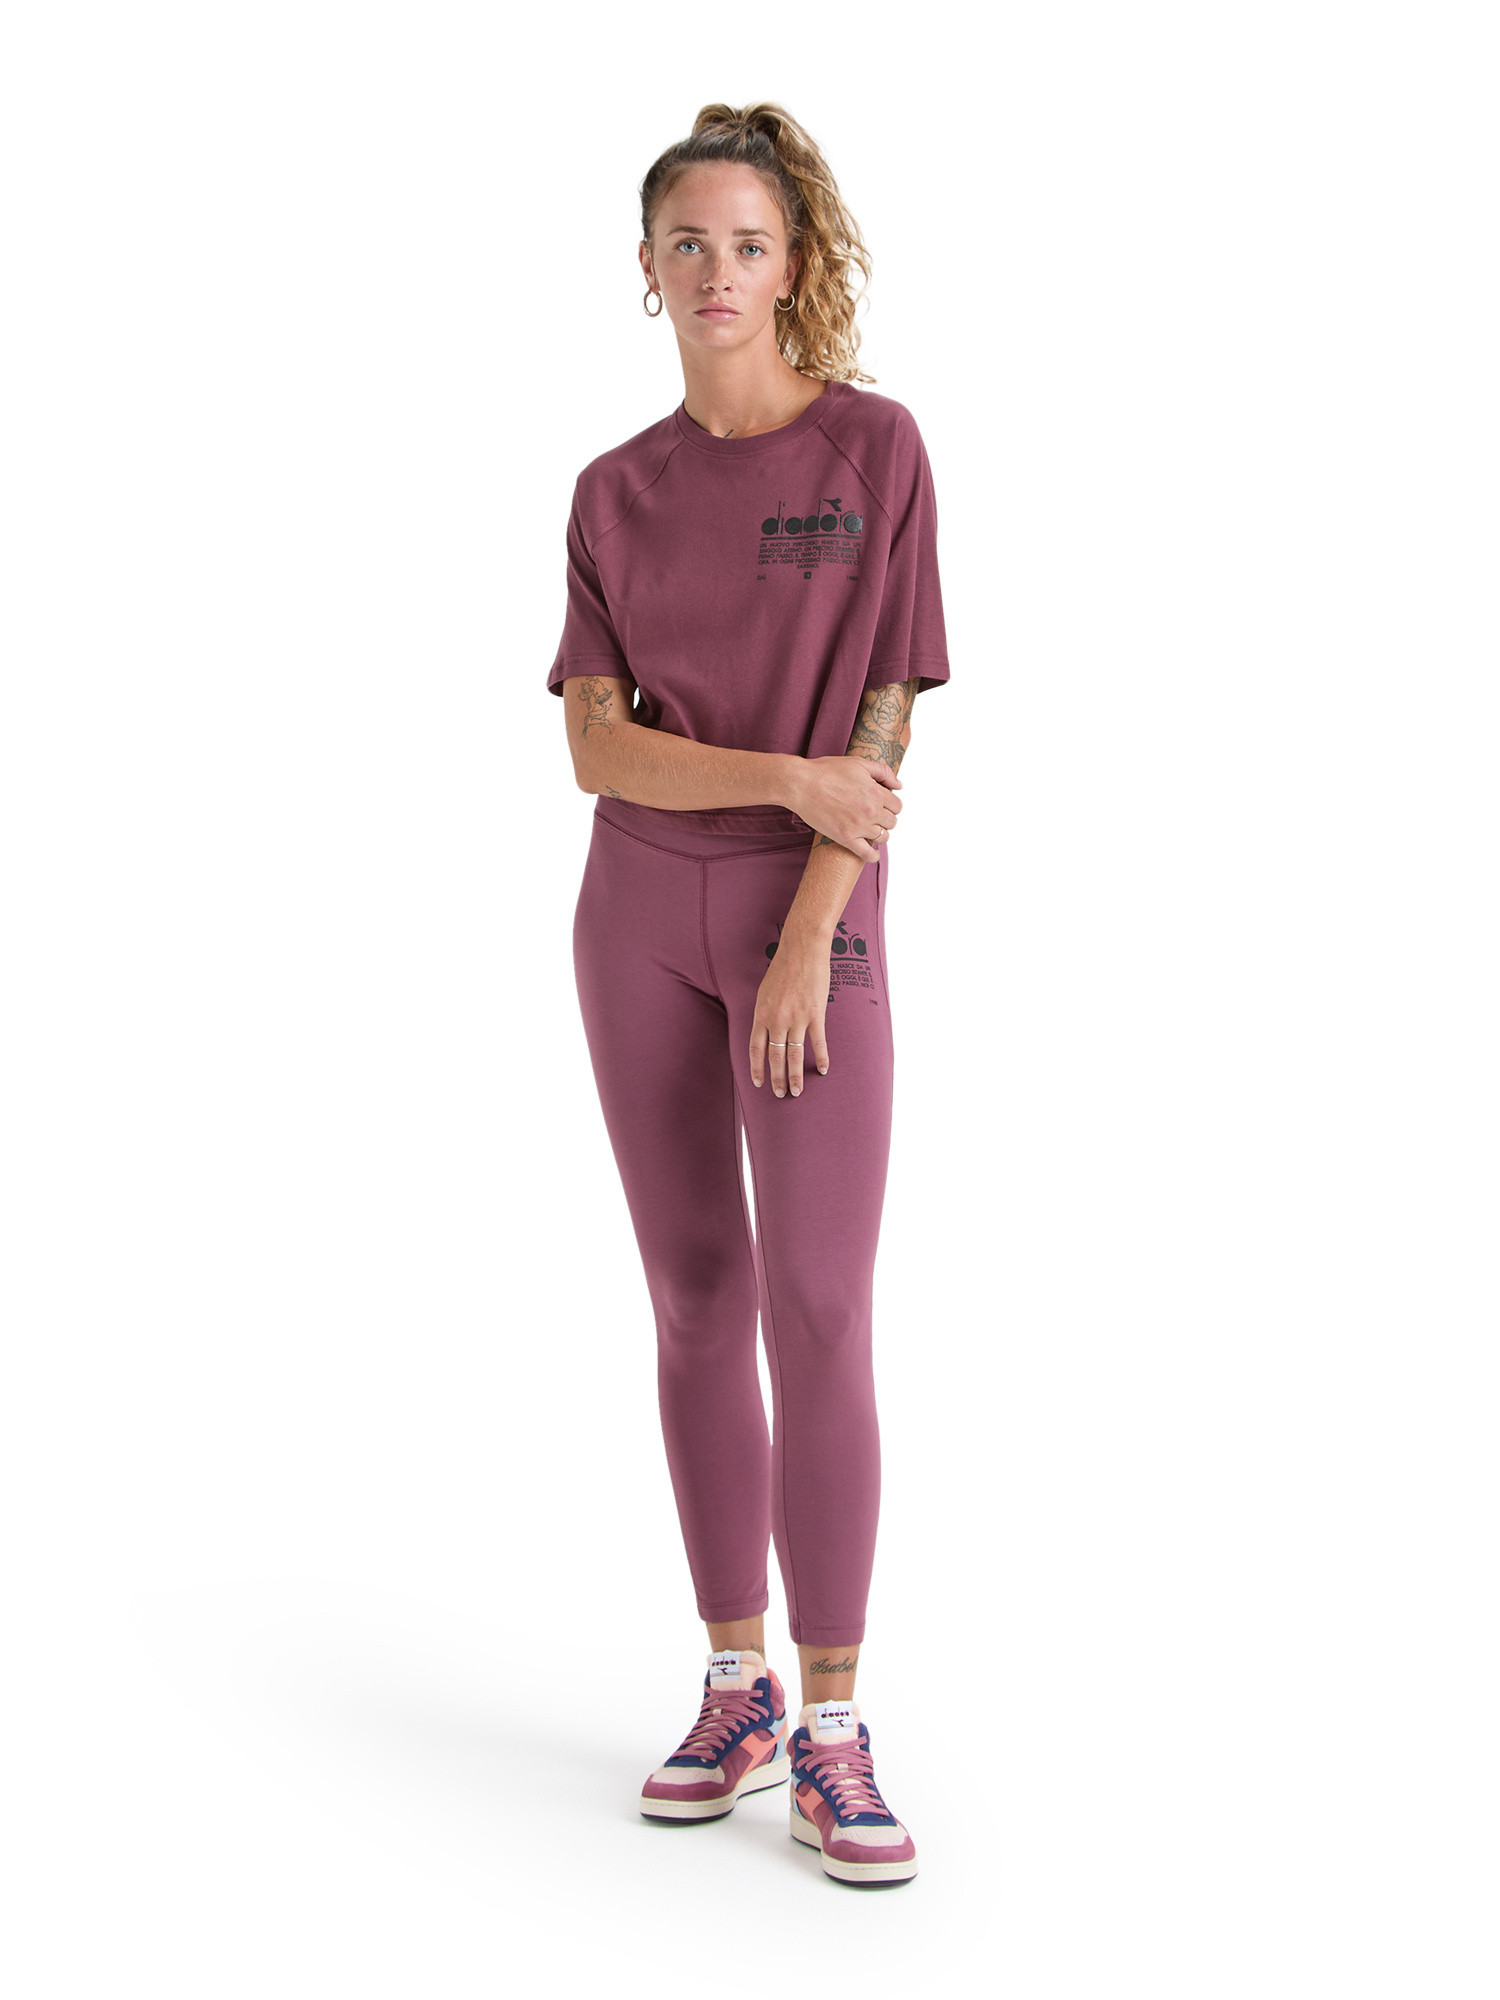 Diadora - Manifesto cotton T-shirt, Purple, large image number 5